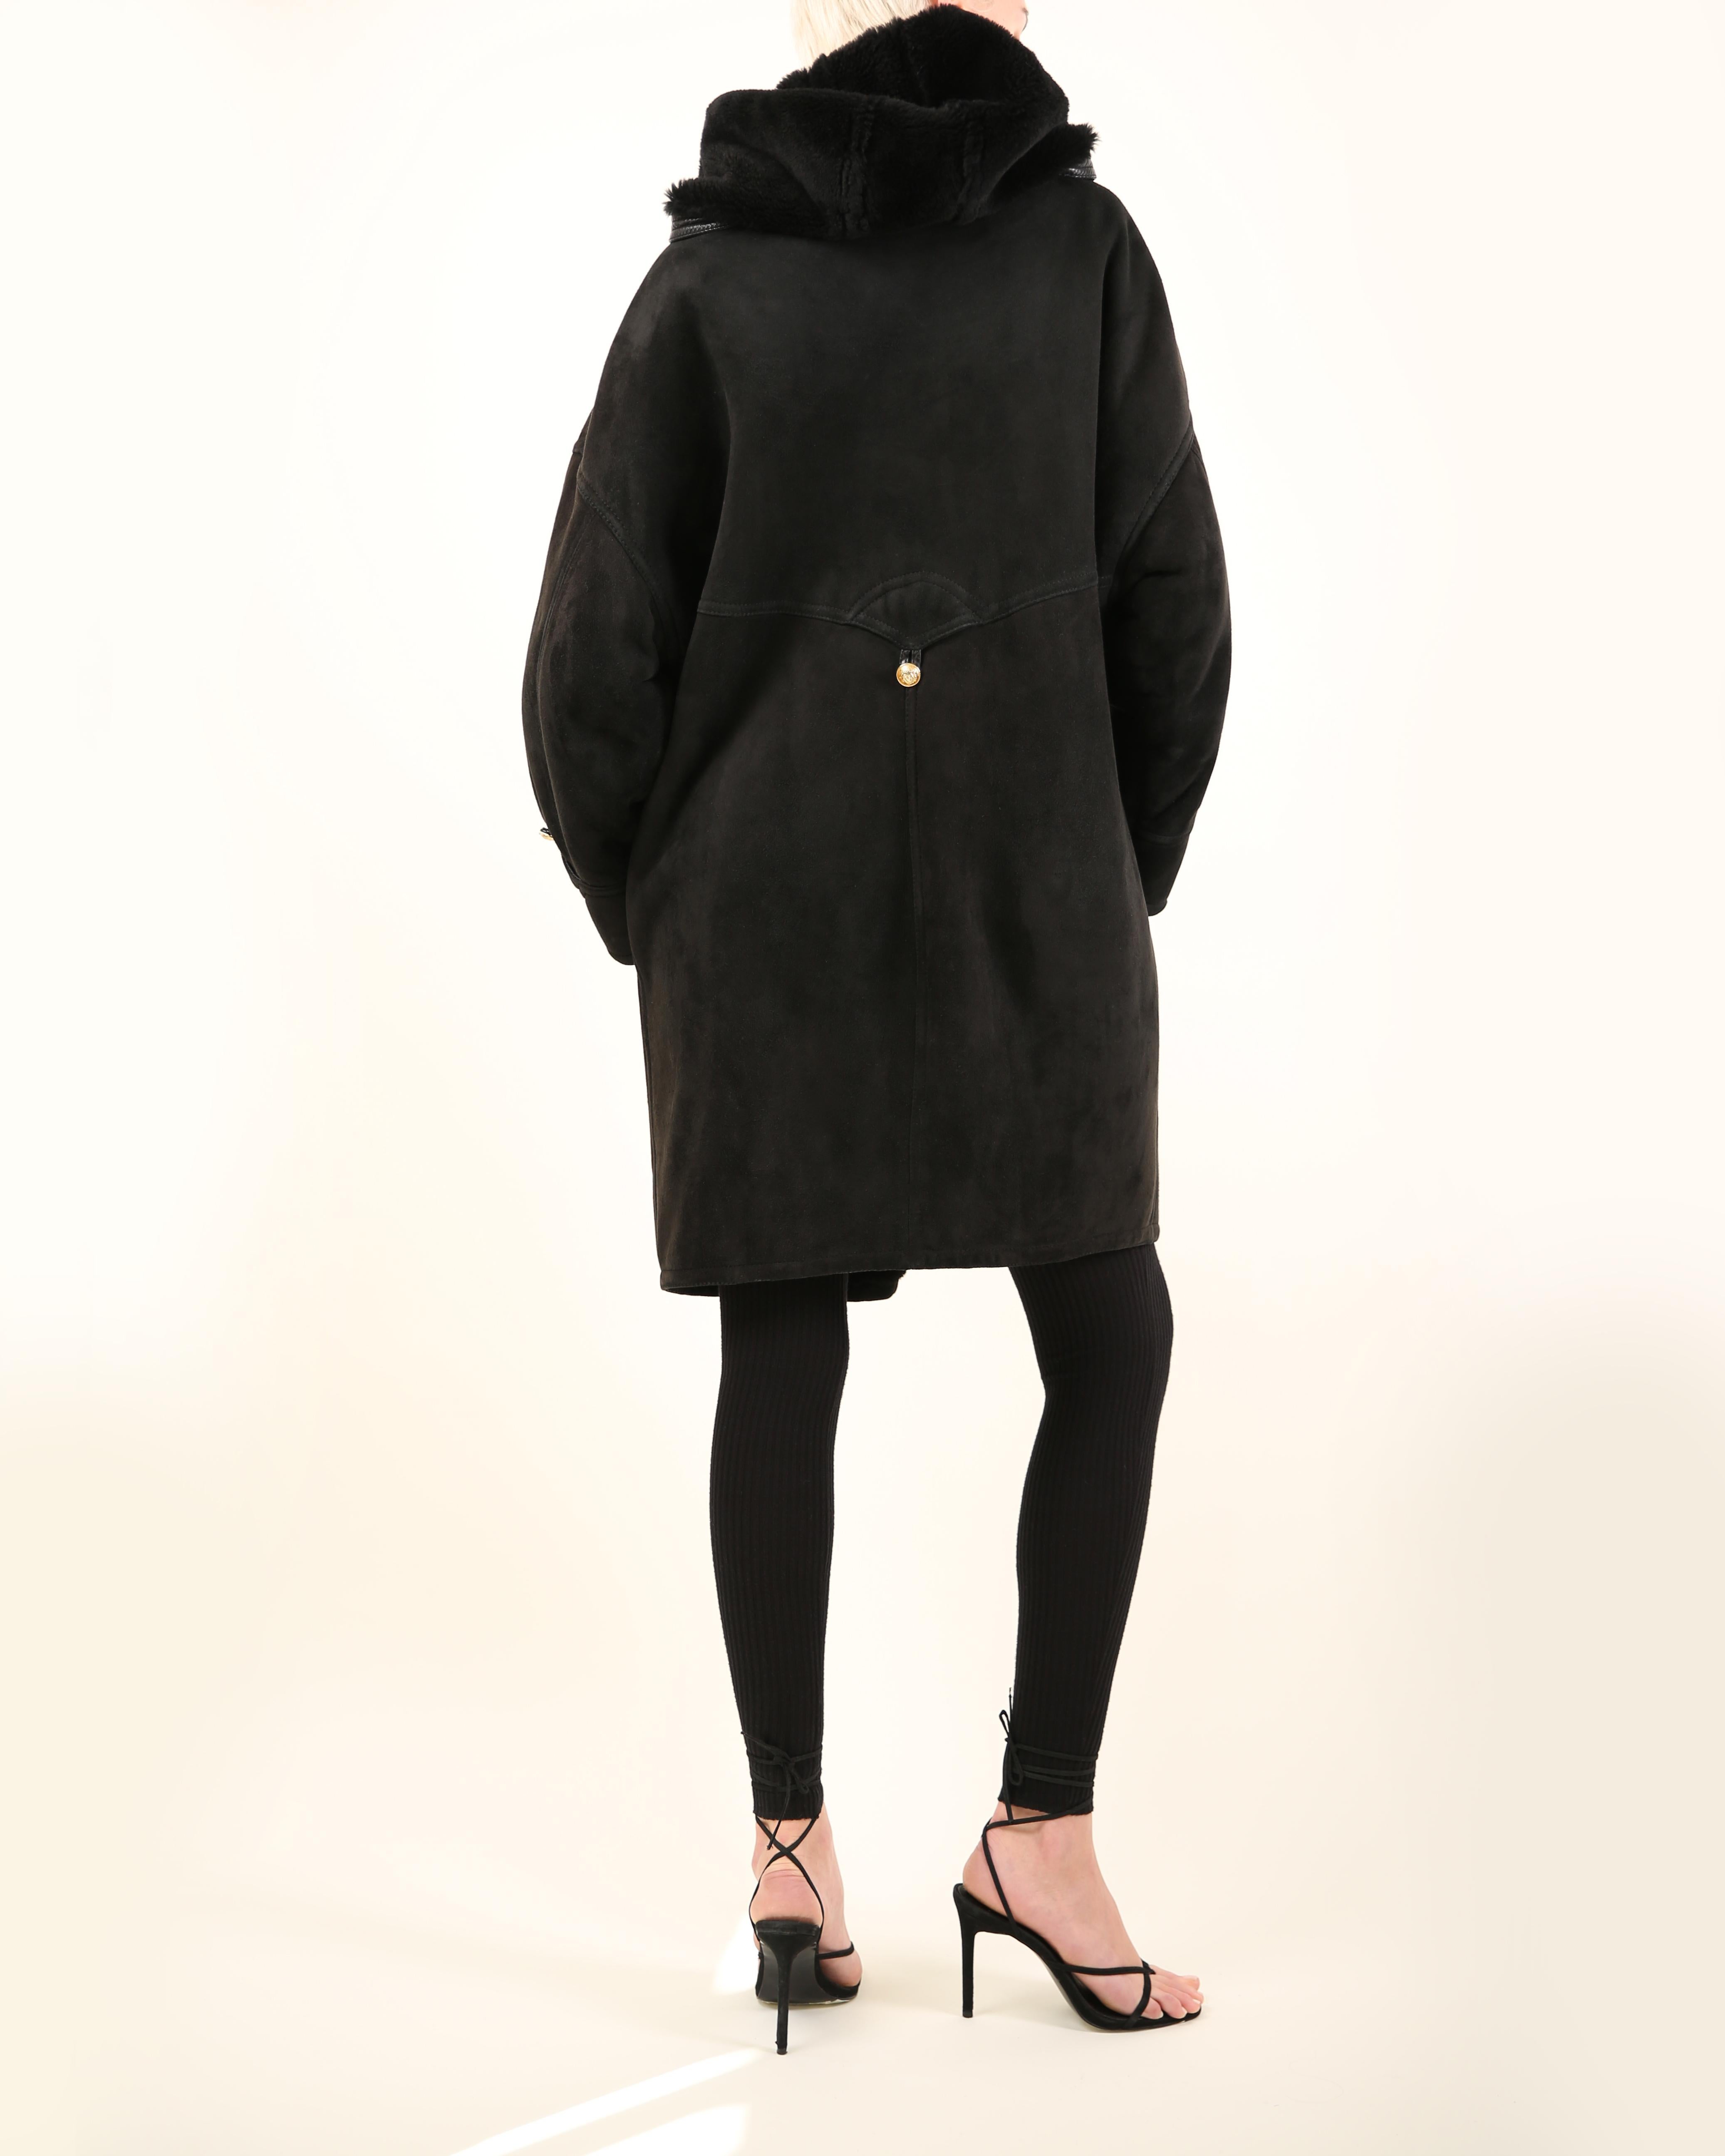 Gianni Versace 90's XS - L black leather suede shearling bondage coat jacket For Sale 6